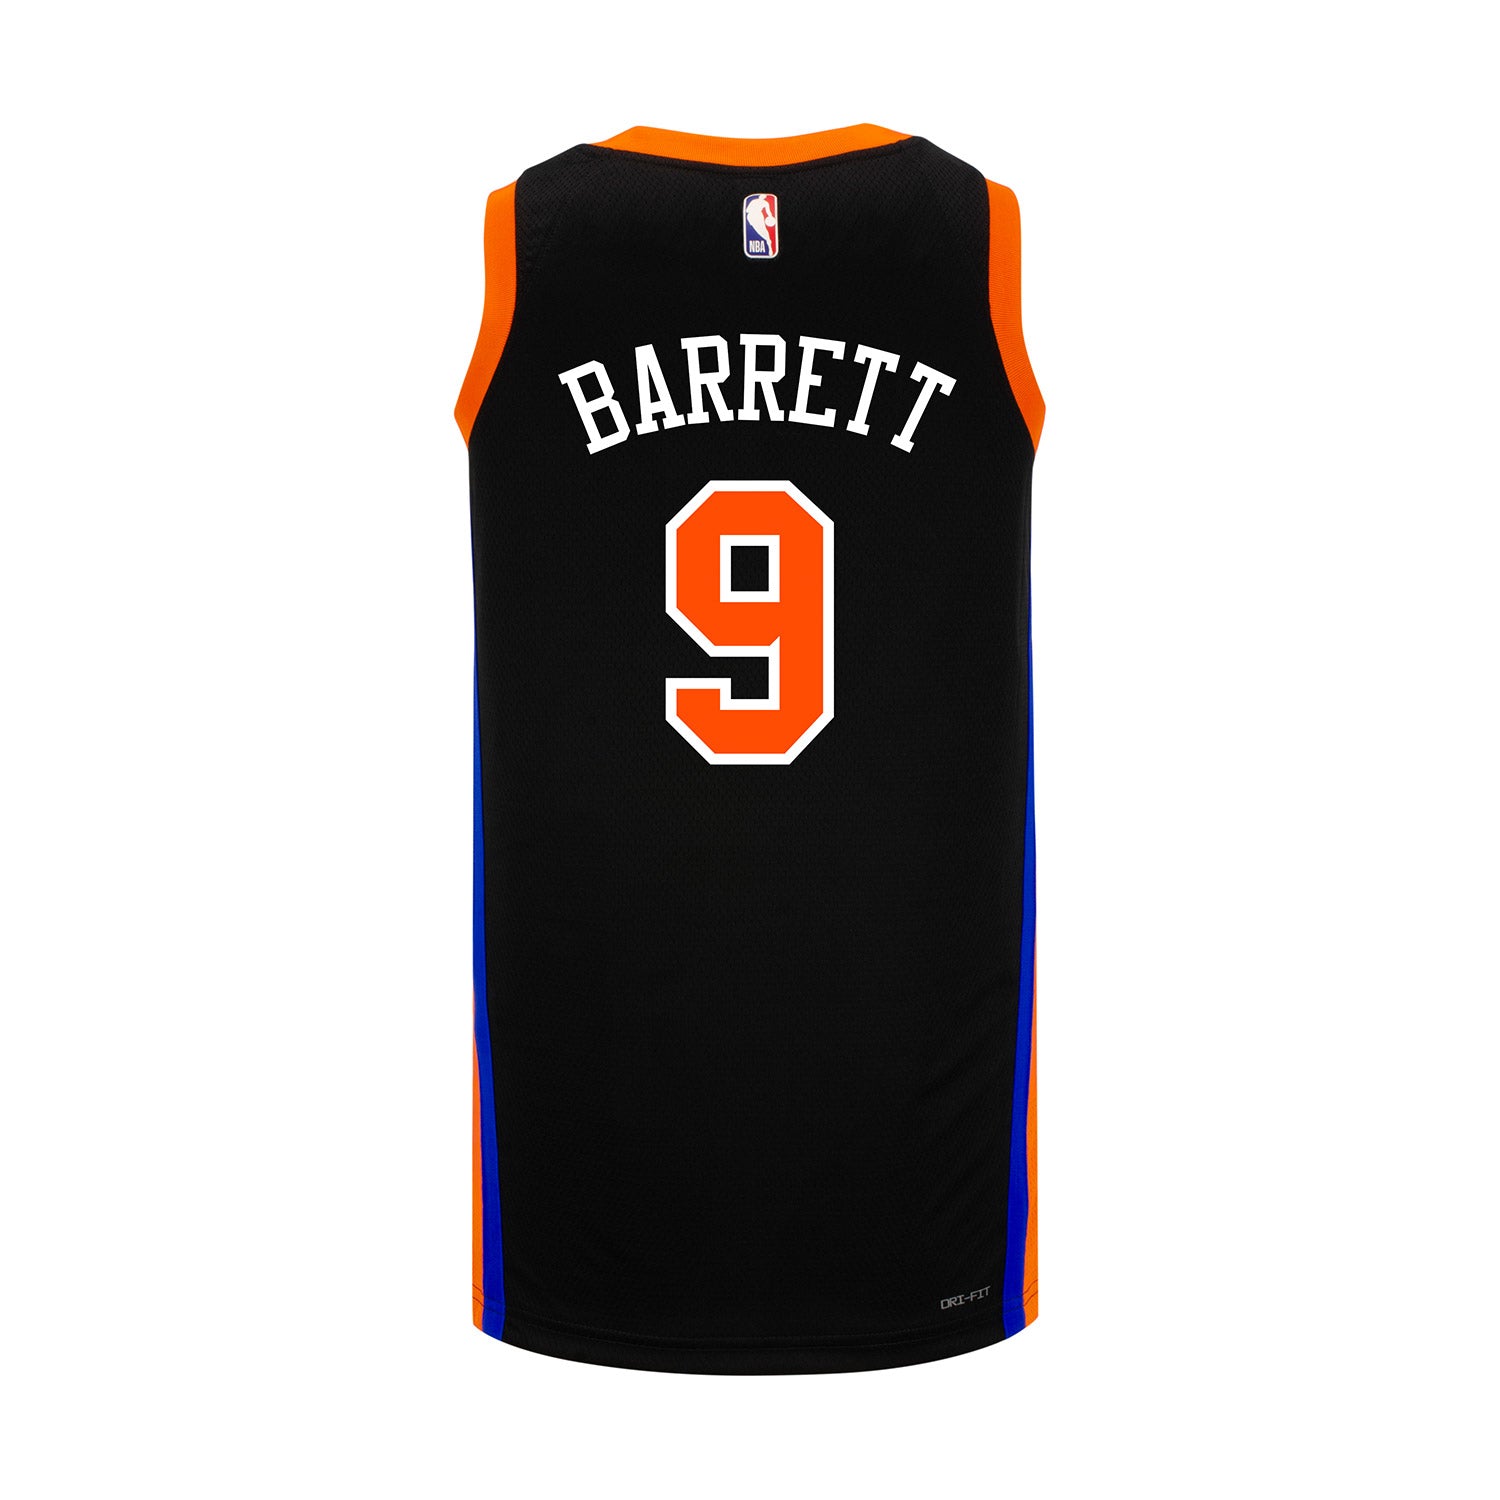 RJ Barrett - New York Knicks - Game-Worn City Edition Jersey